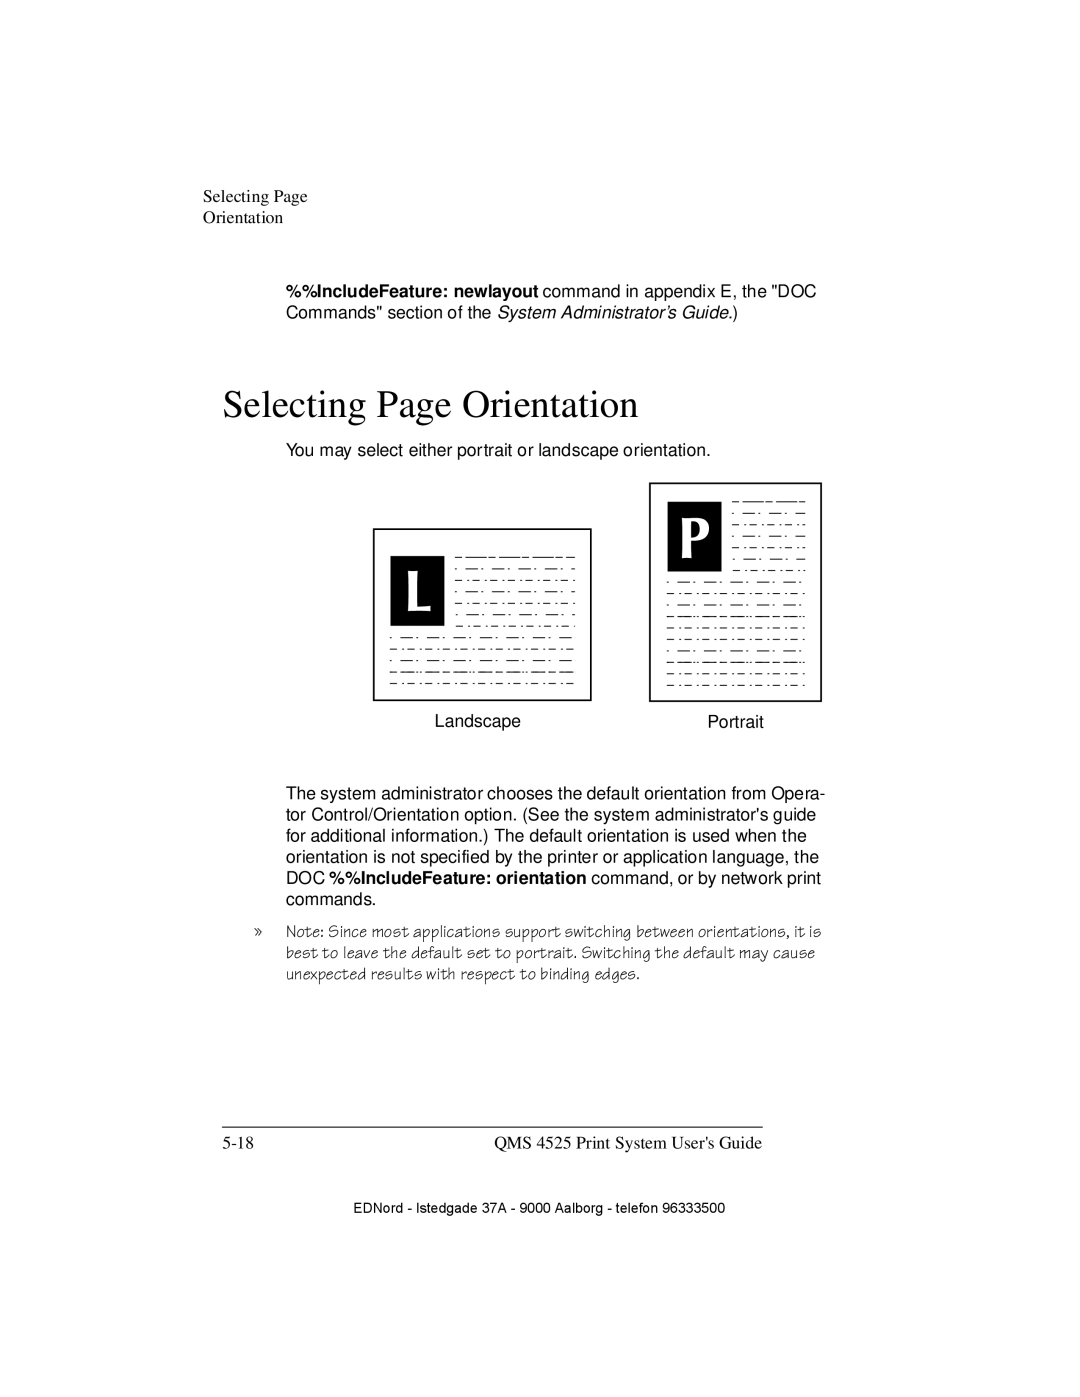 IBM QMS 4525 manual Selecting Page Orientation 